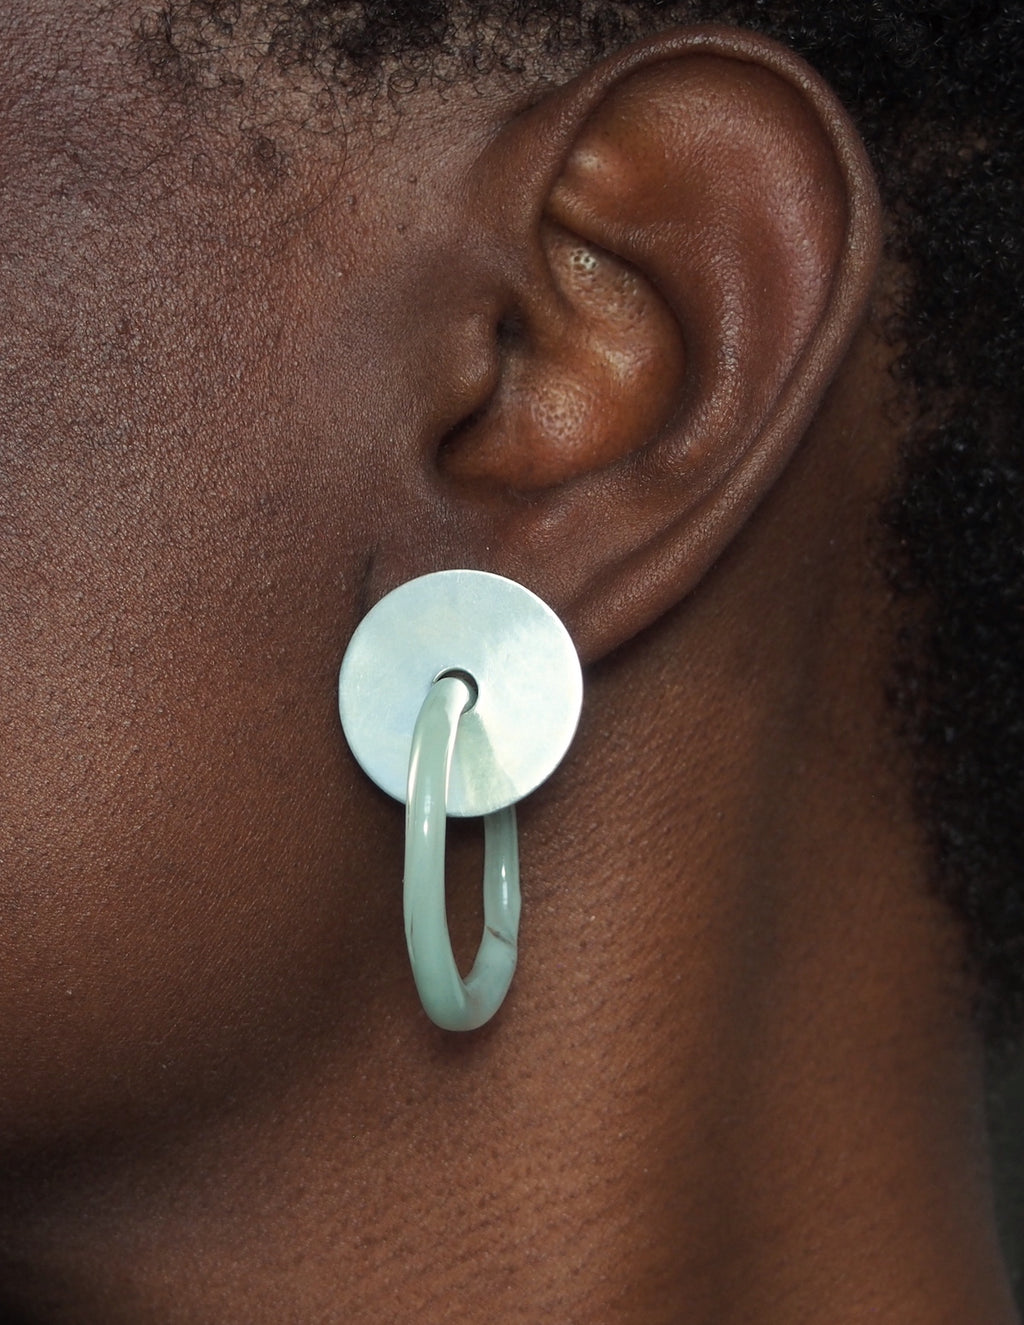 green glass hoop earrings with sterling silver stud shown on mondel